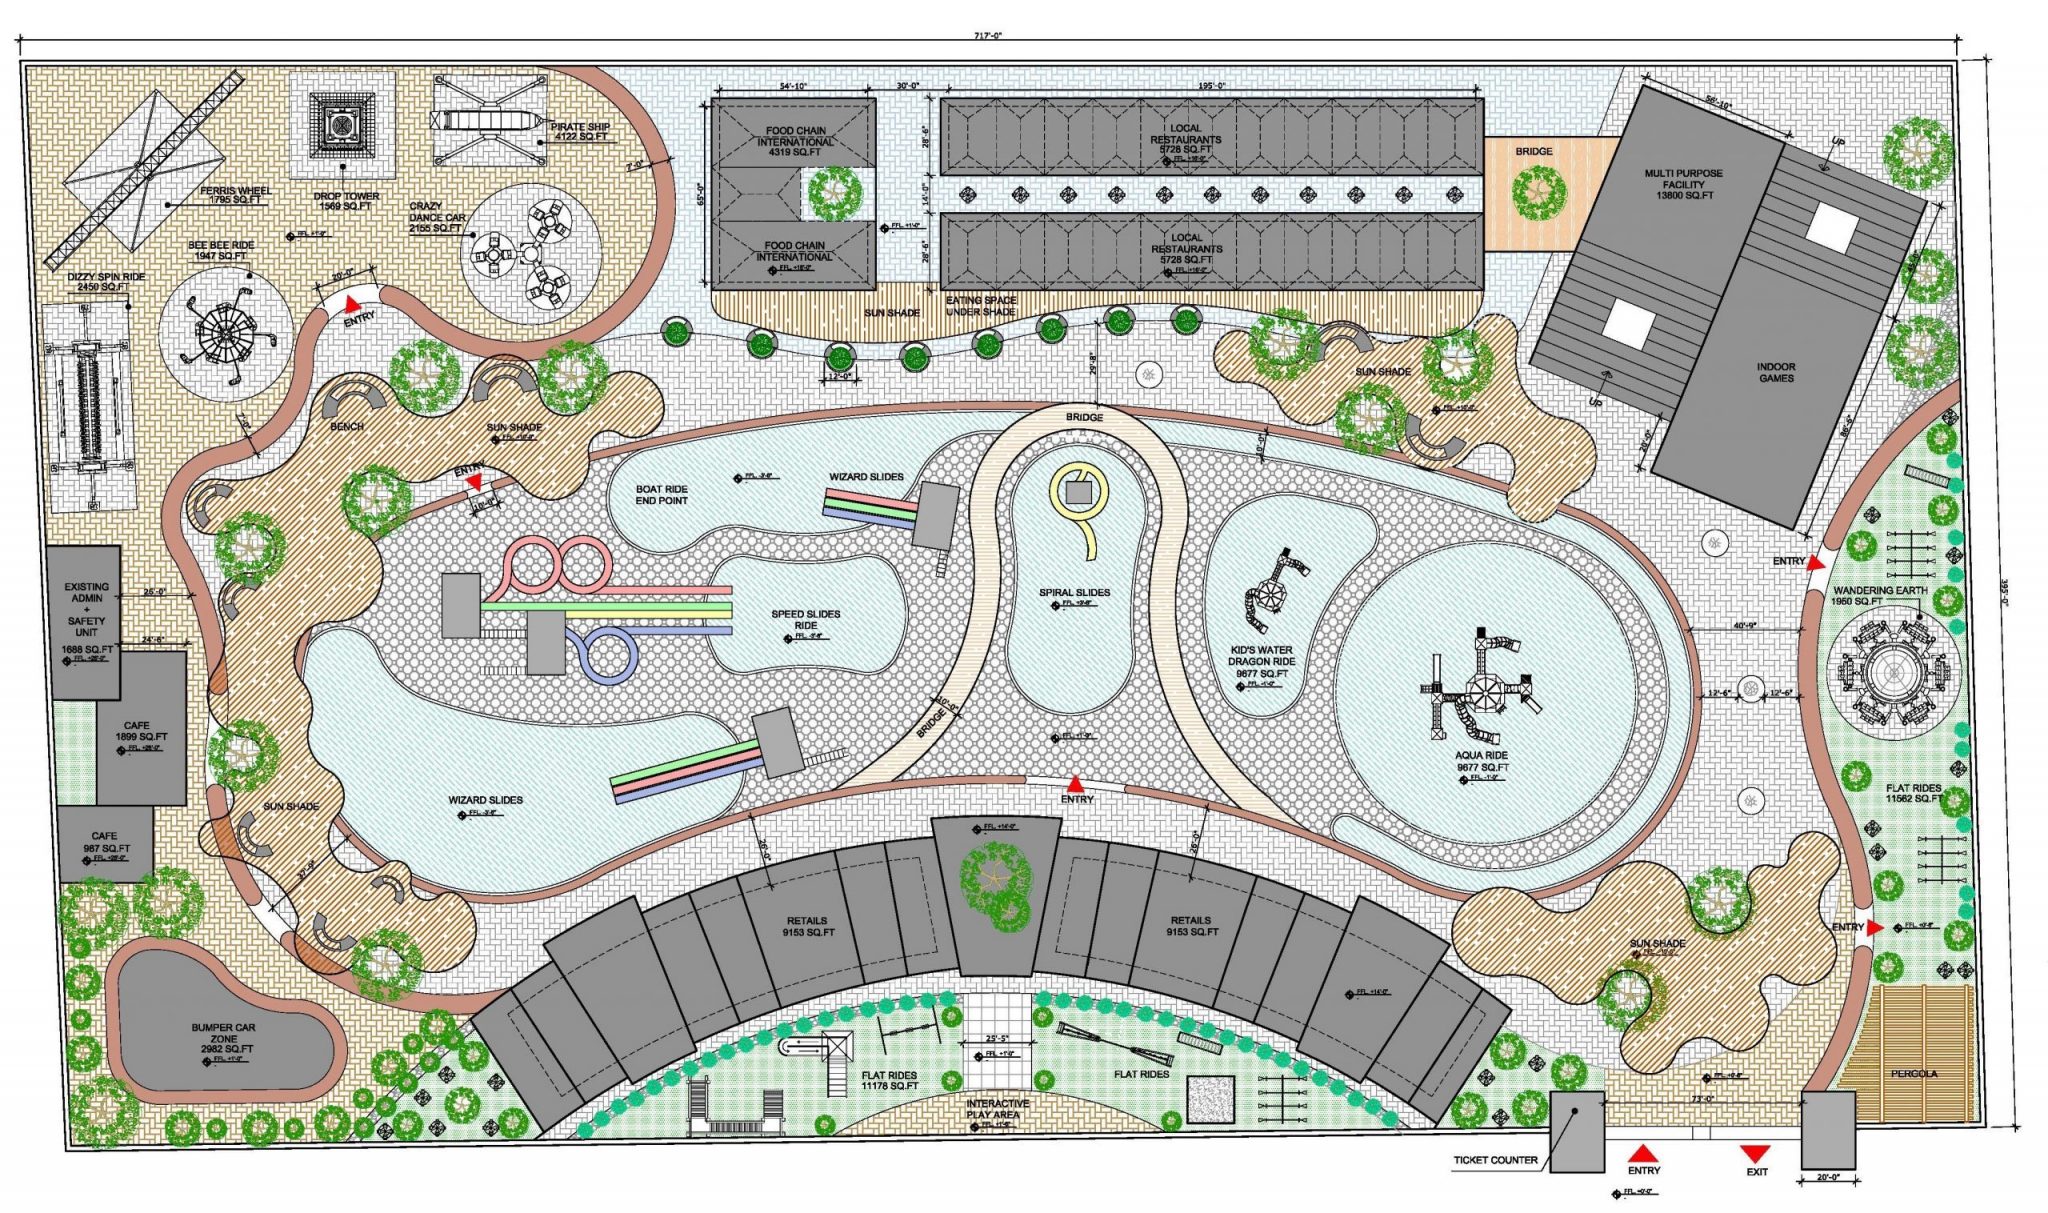 business planning for amusement parks